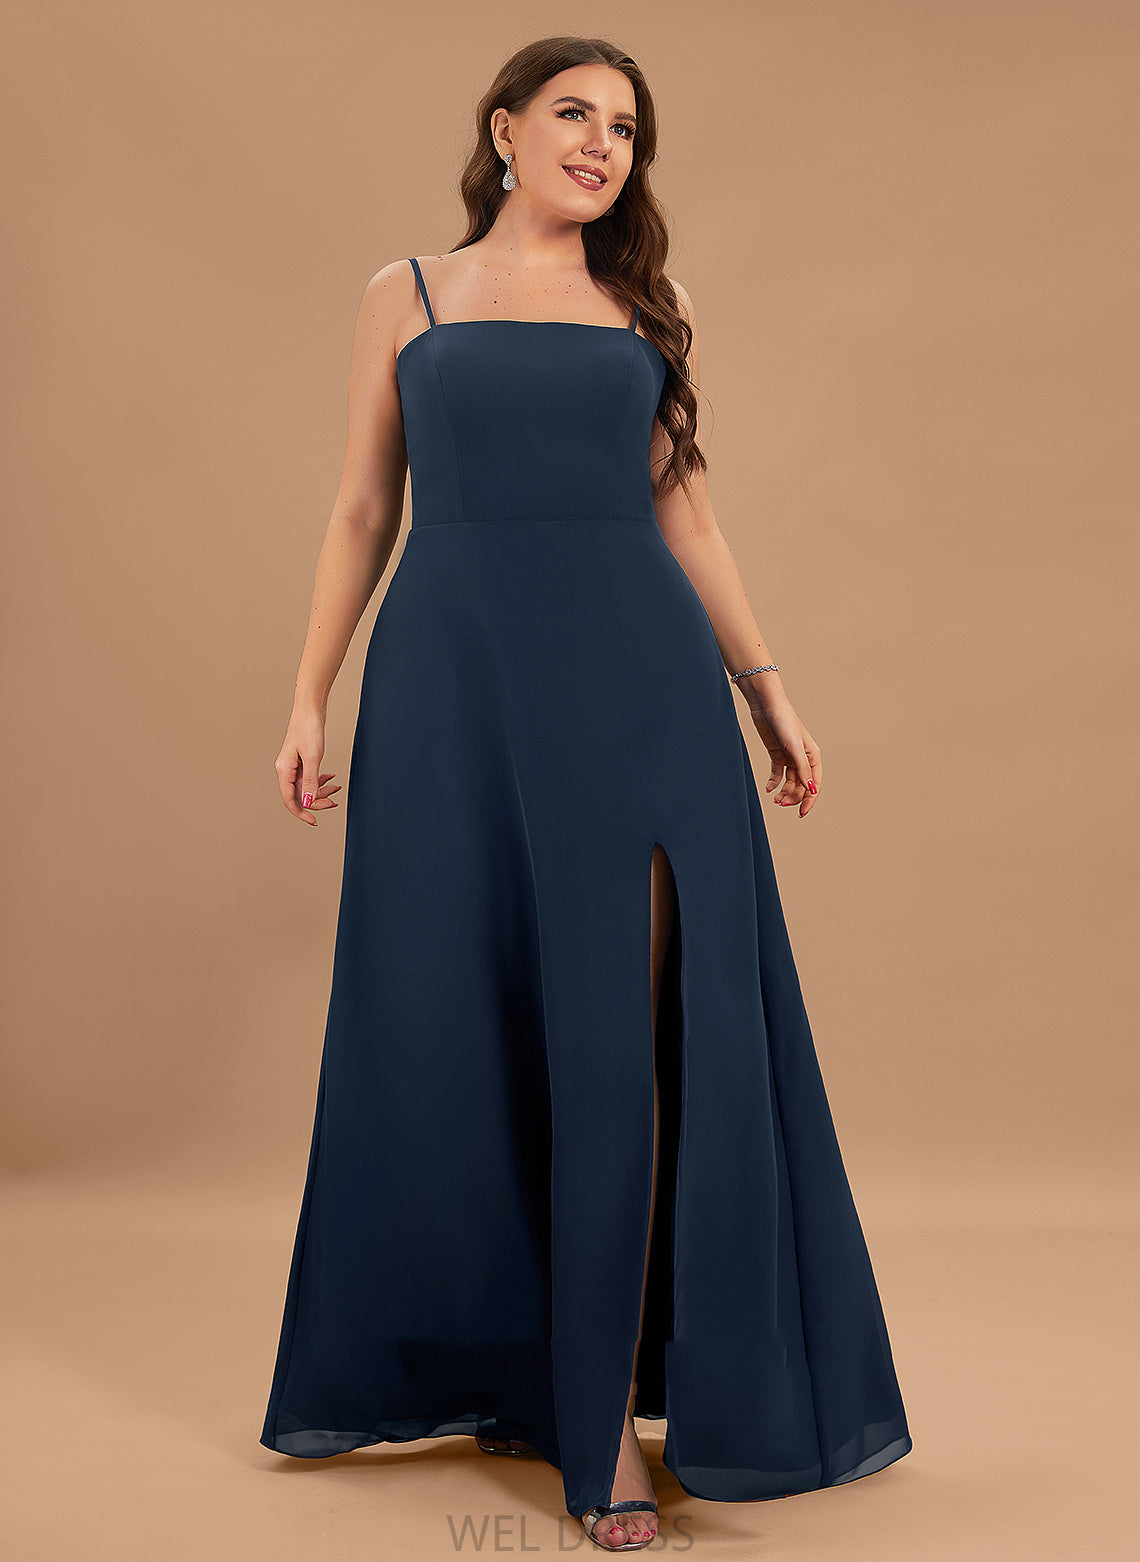 SquareNeckline Neckline Floor-Length SplitFront A-Line Length Fabric Embellishment Silhouette Georgia Sleeveless Trumpet/Mermaid Bridesmaid Dresses